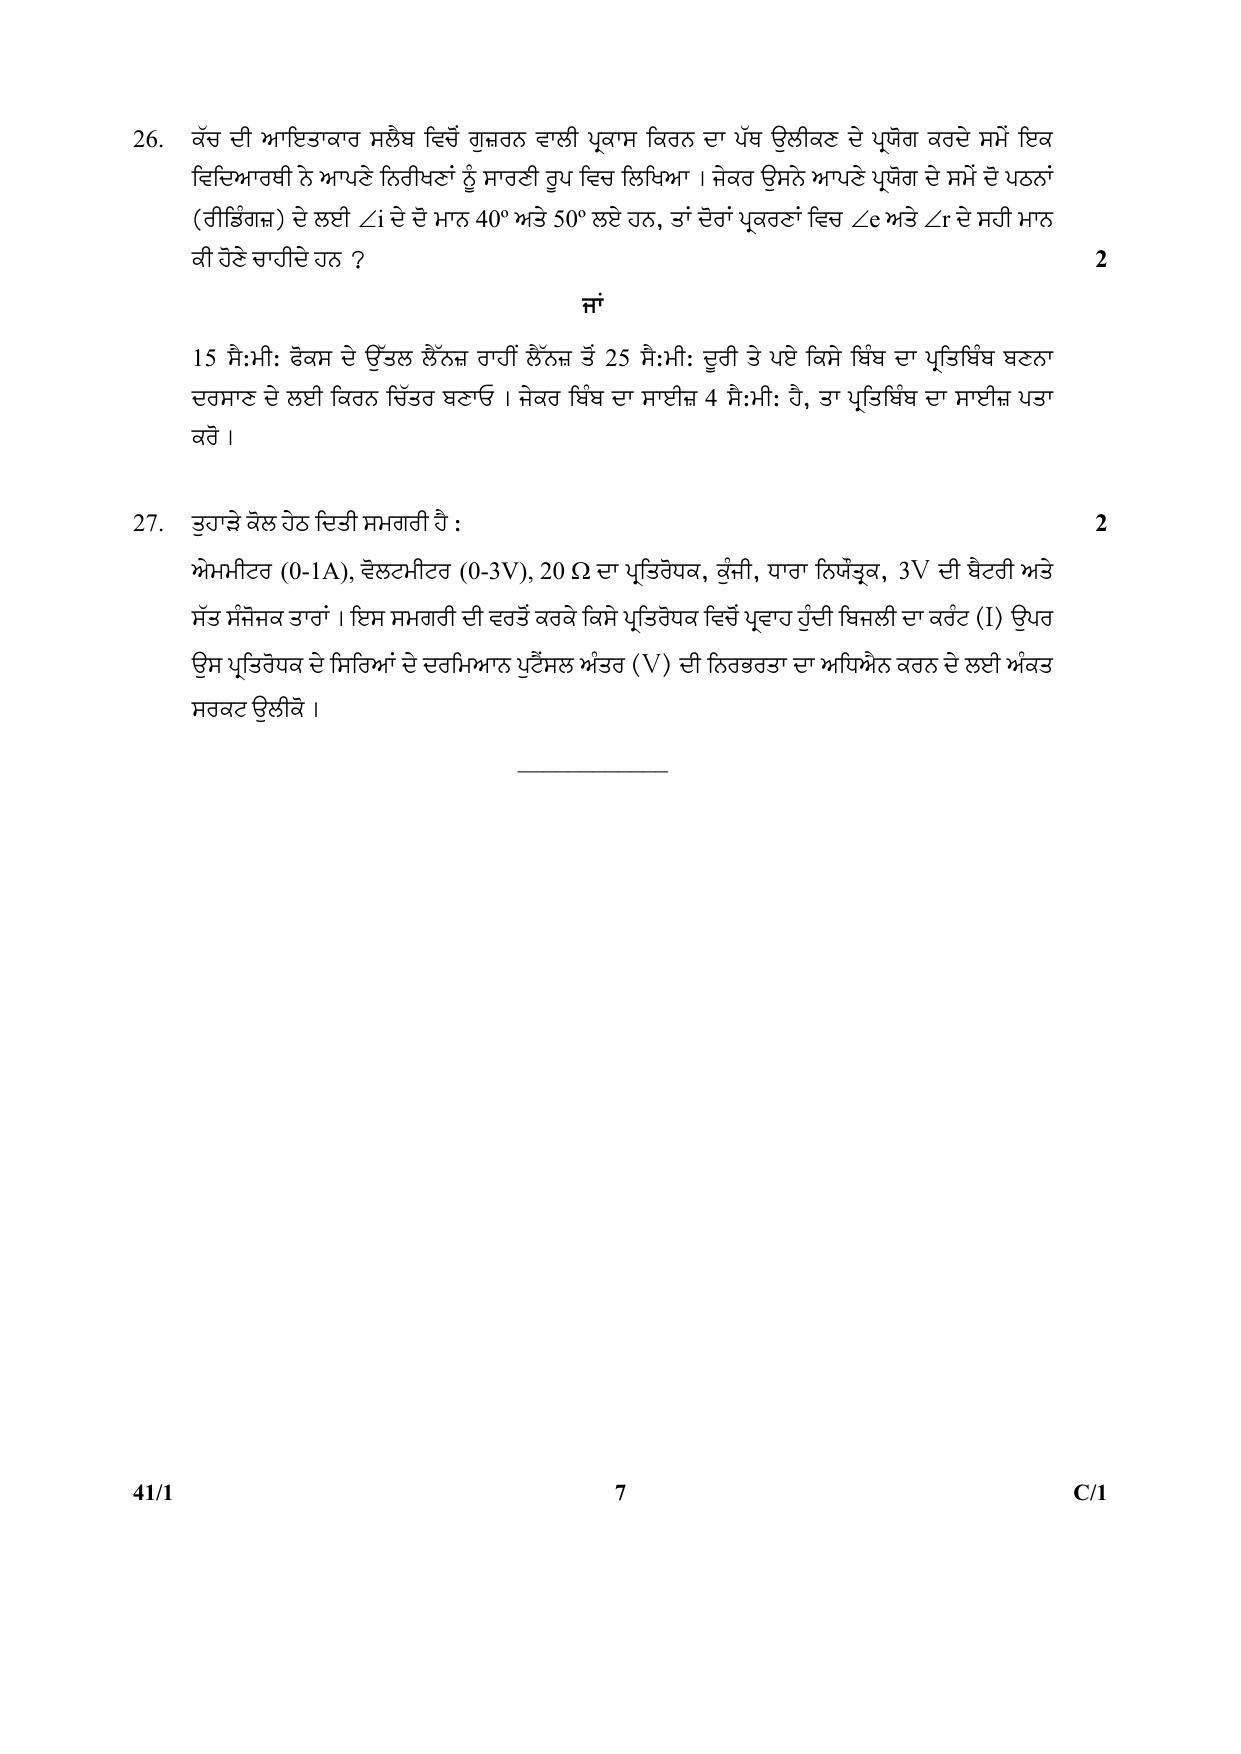 CBSE Class 10 41-1 Science PUNJABI VERSION 2018 Compartment Question Paper - Page 7